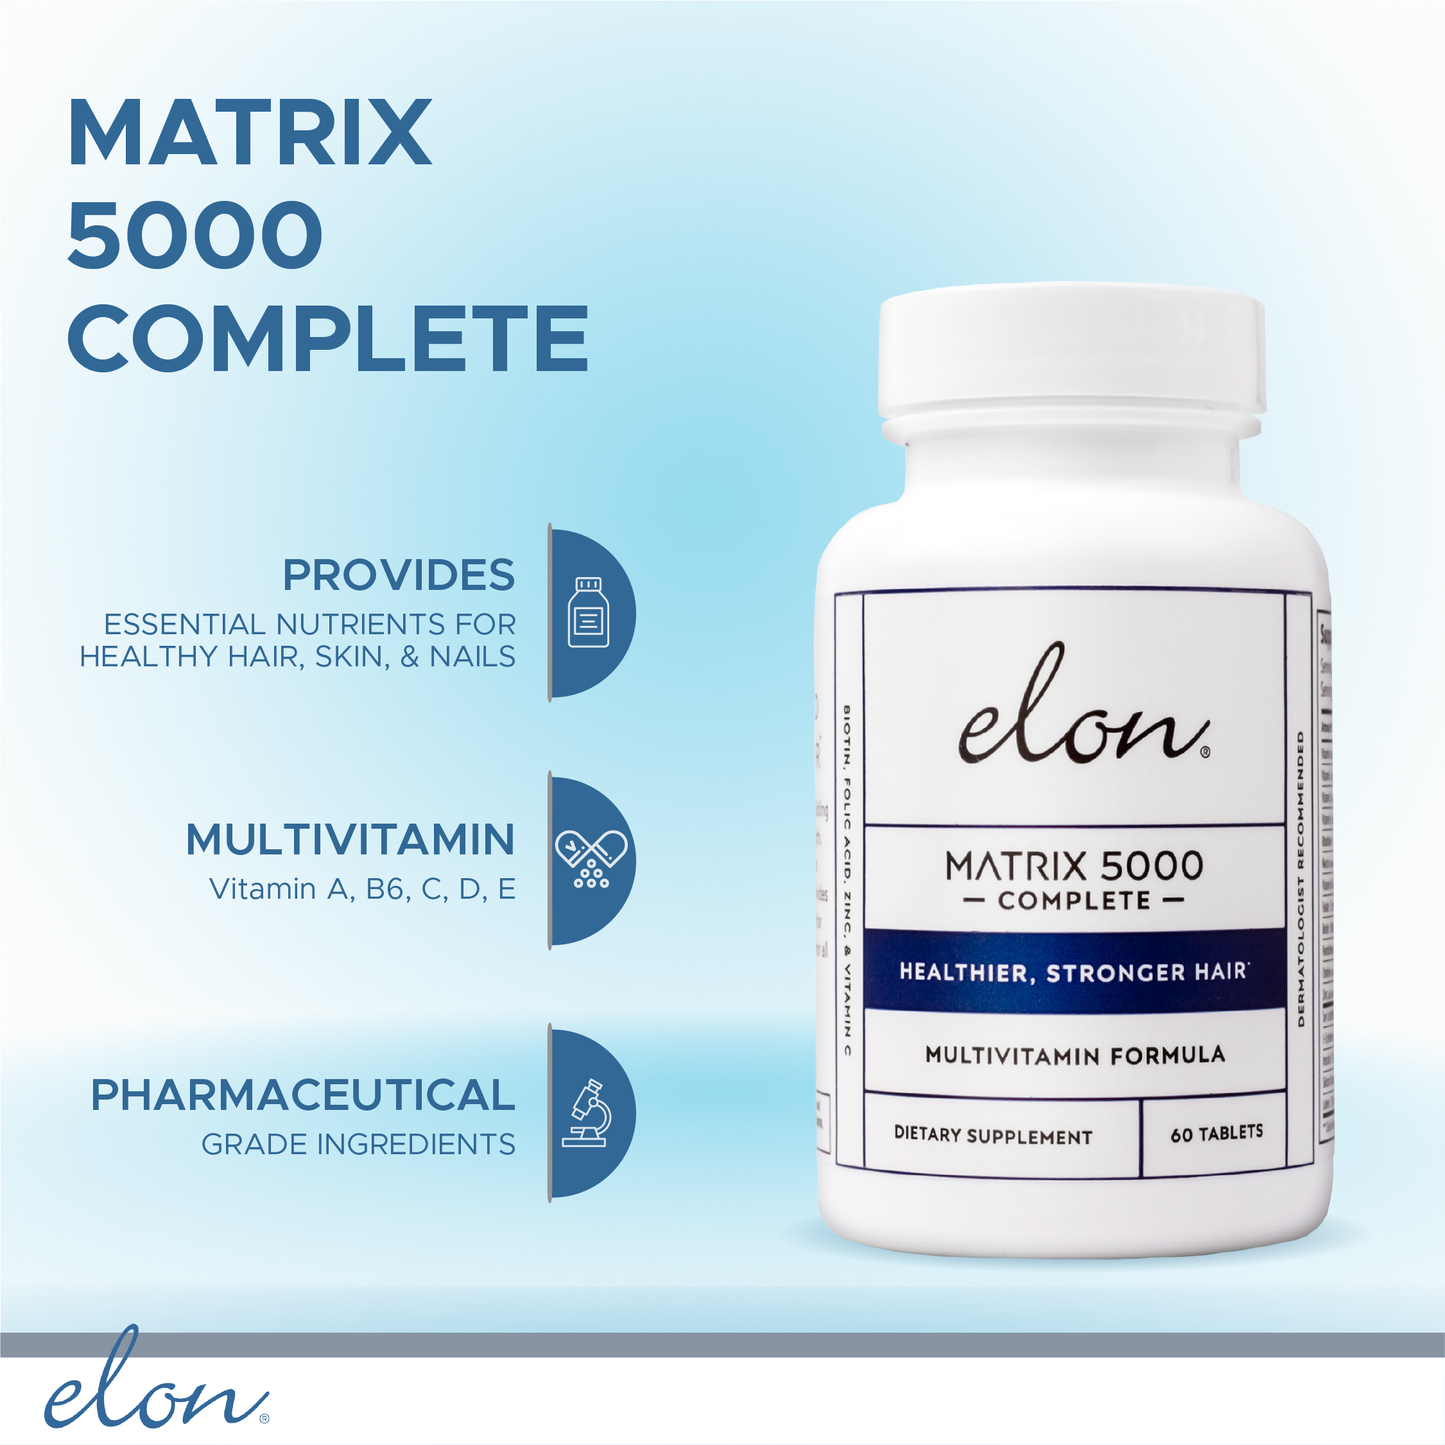 Elon Matrix 5000 Complete Multivitamin for Healthier & Stronger Hair